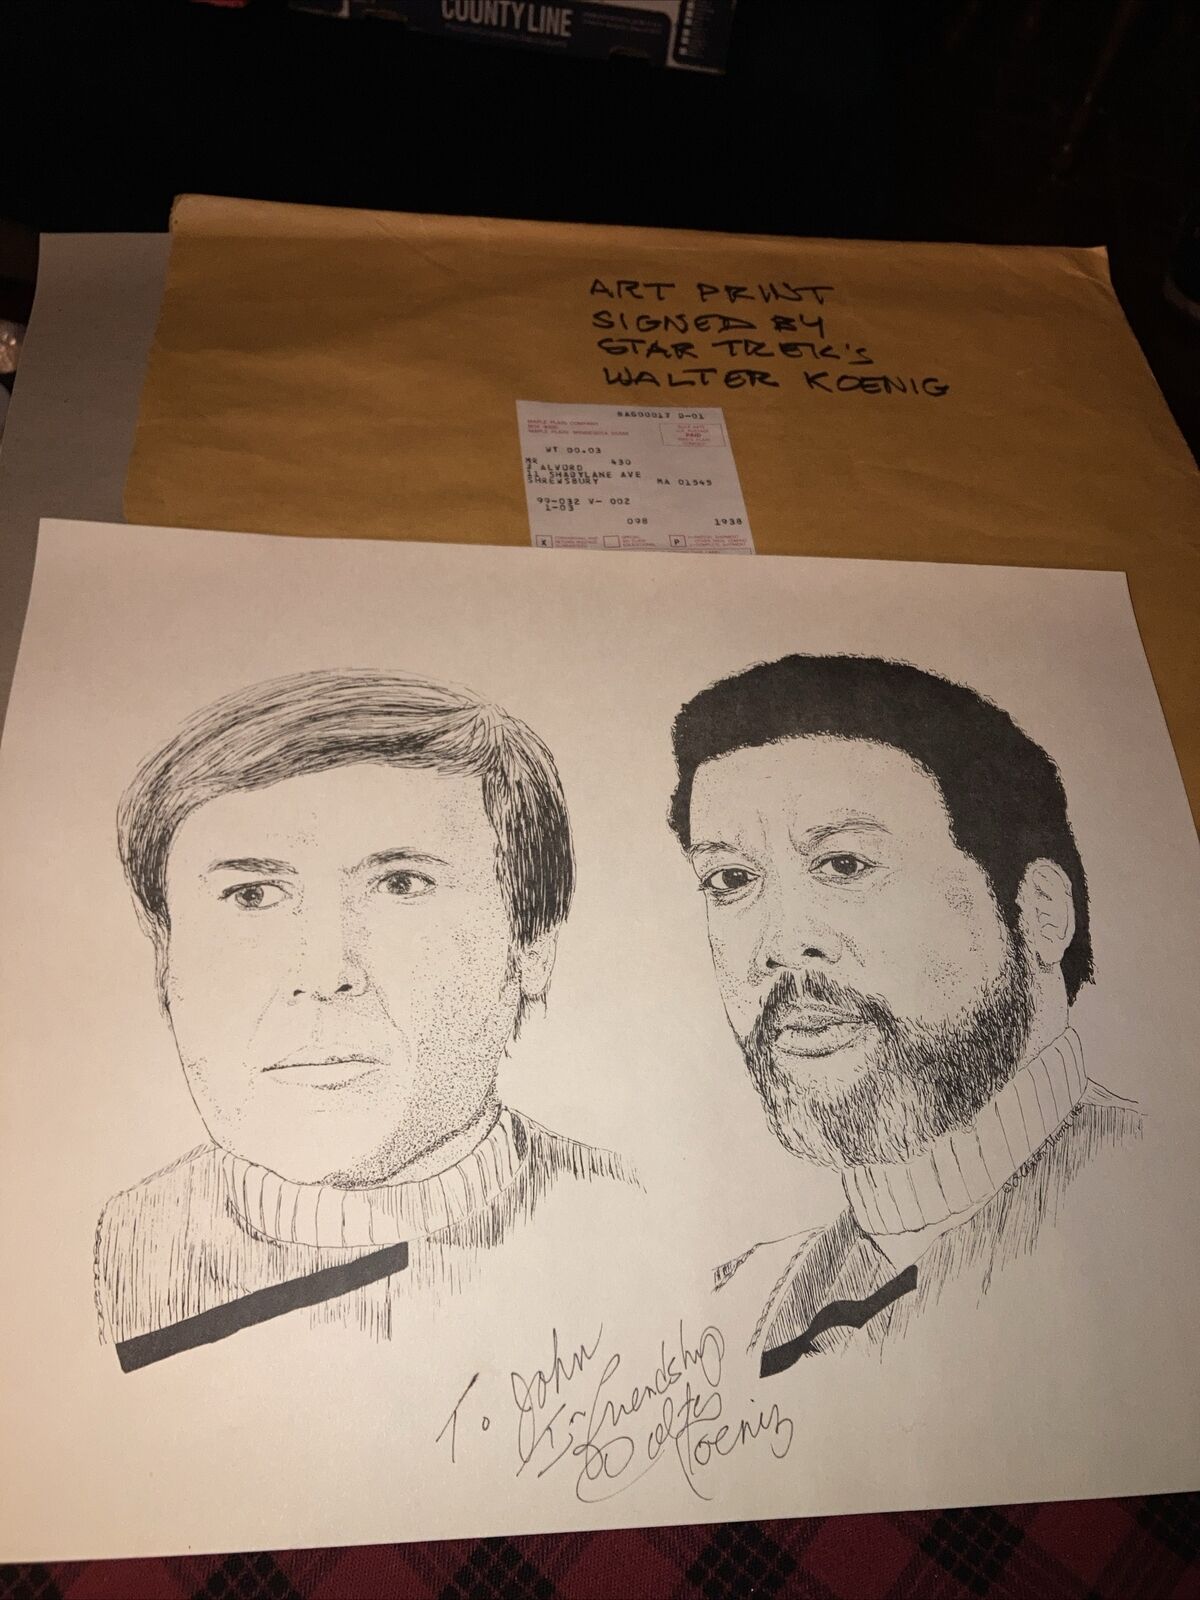 Star Trek’s Walter Koenig Hand Signed Sketch -14”x11” “To John to Friendship ”